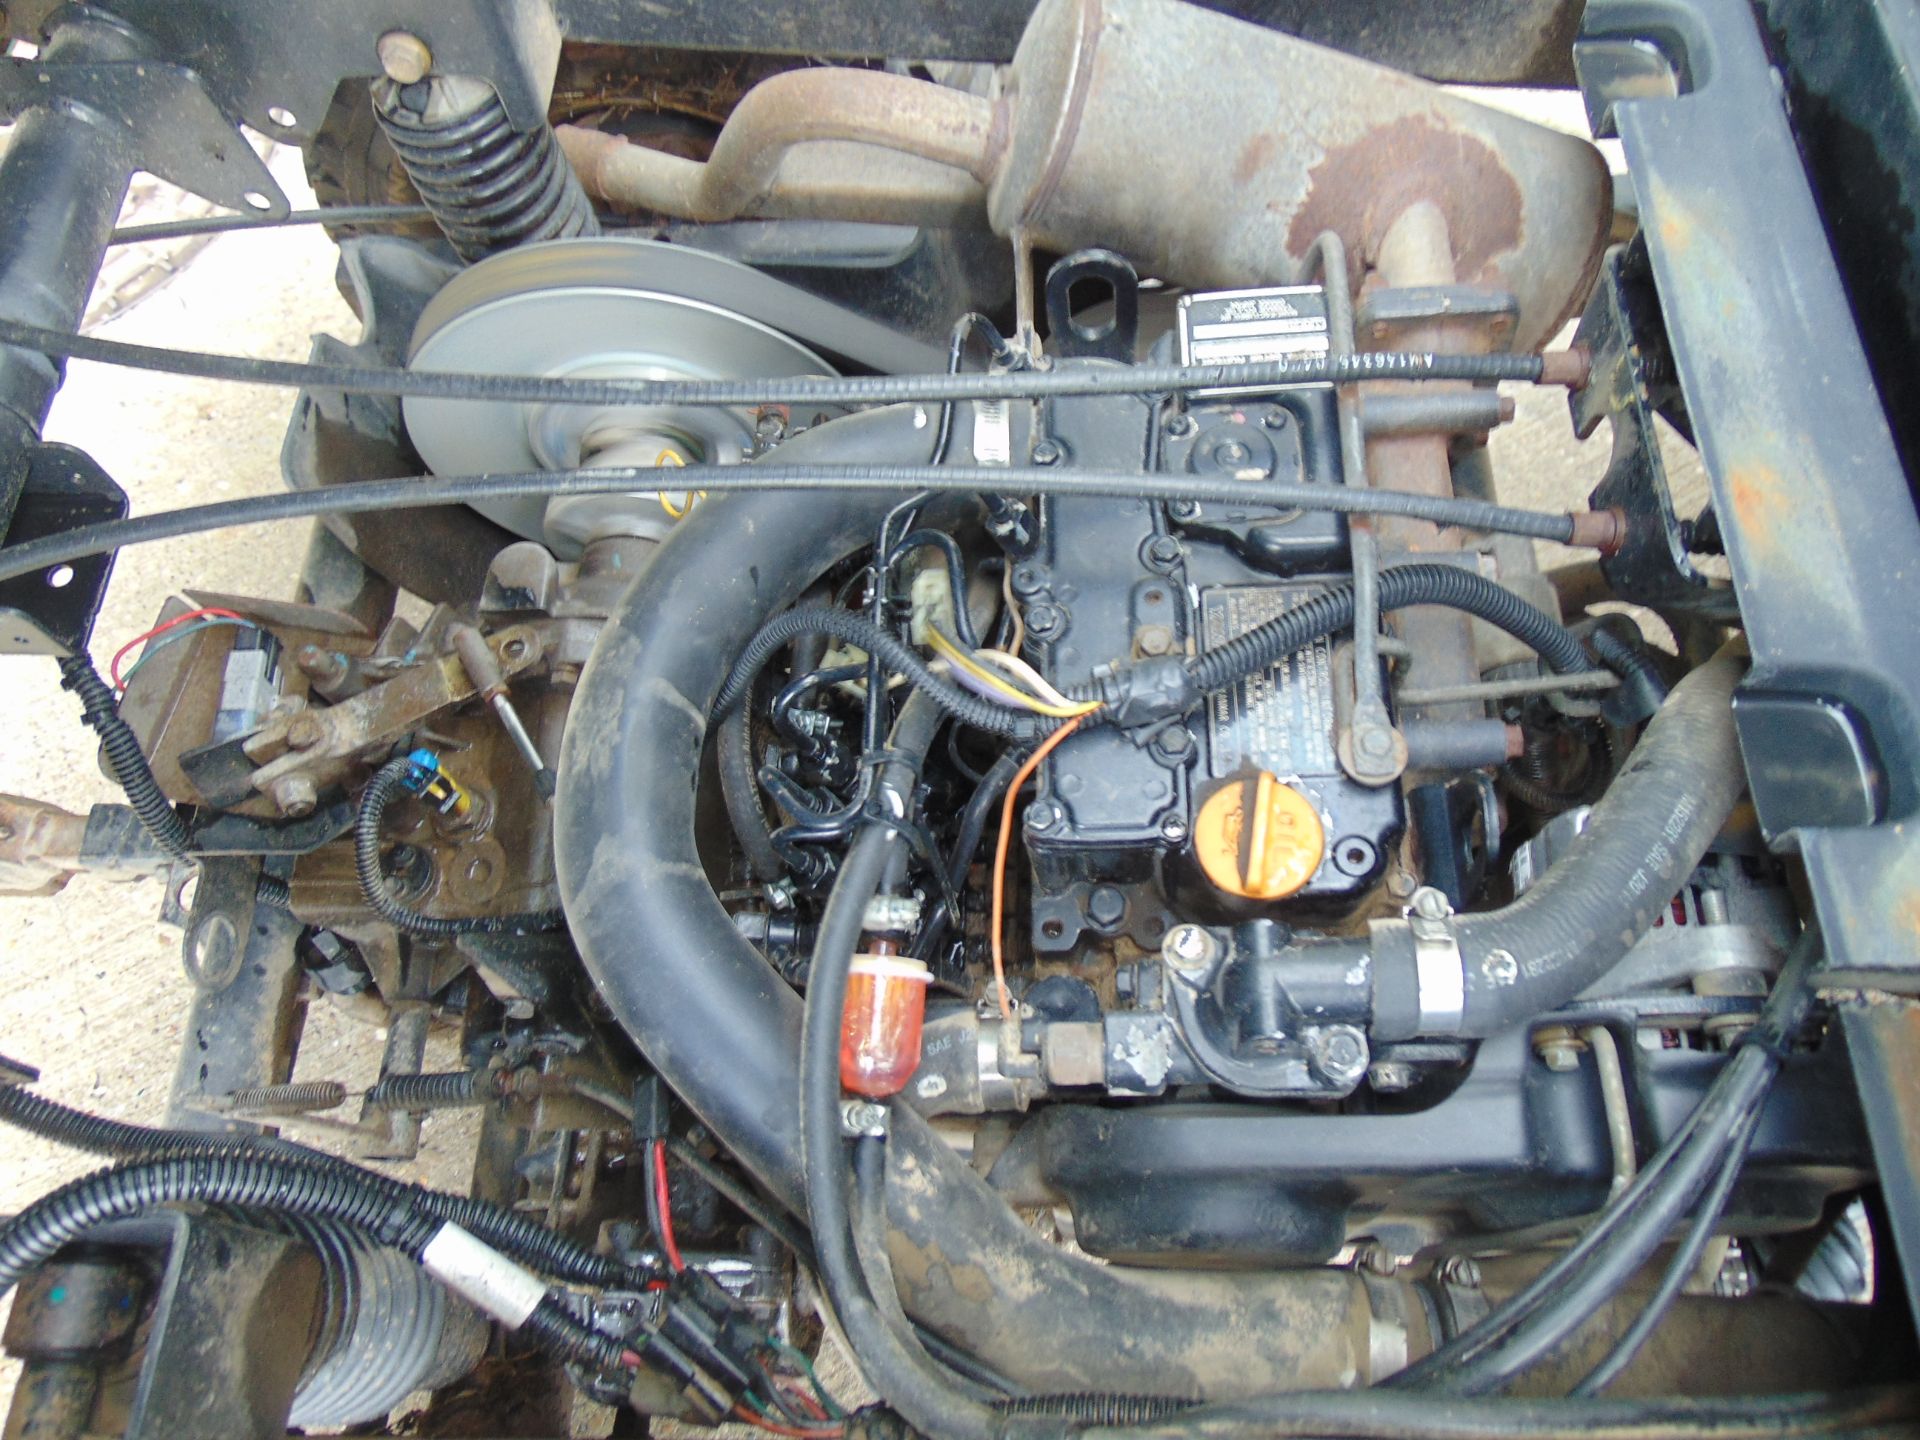 John Deere Gator HPX 4WD Utility ATV Only 1,817 Hours! - Image 11 of 24